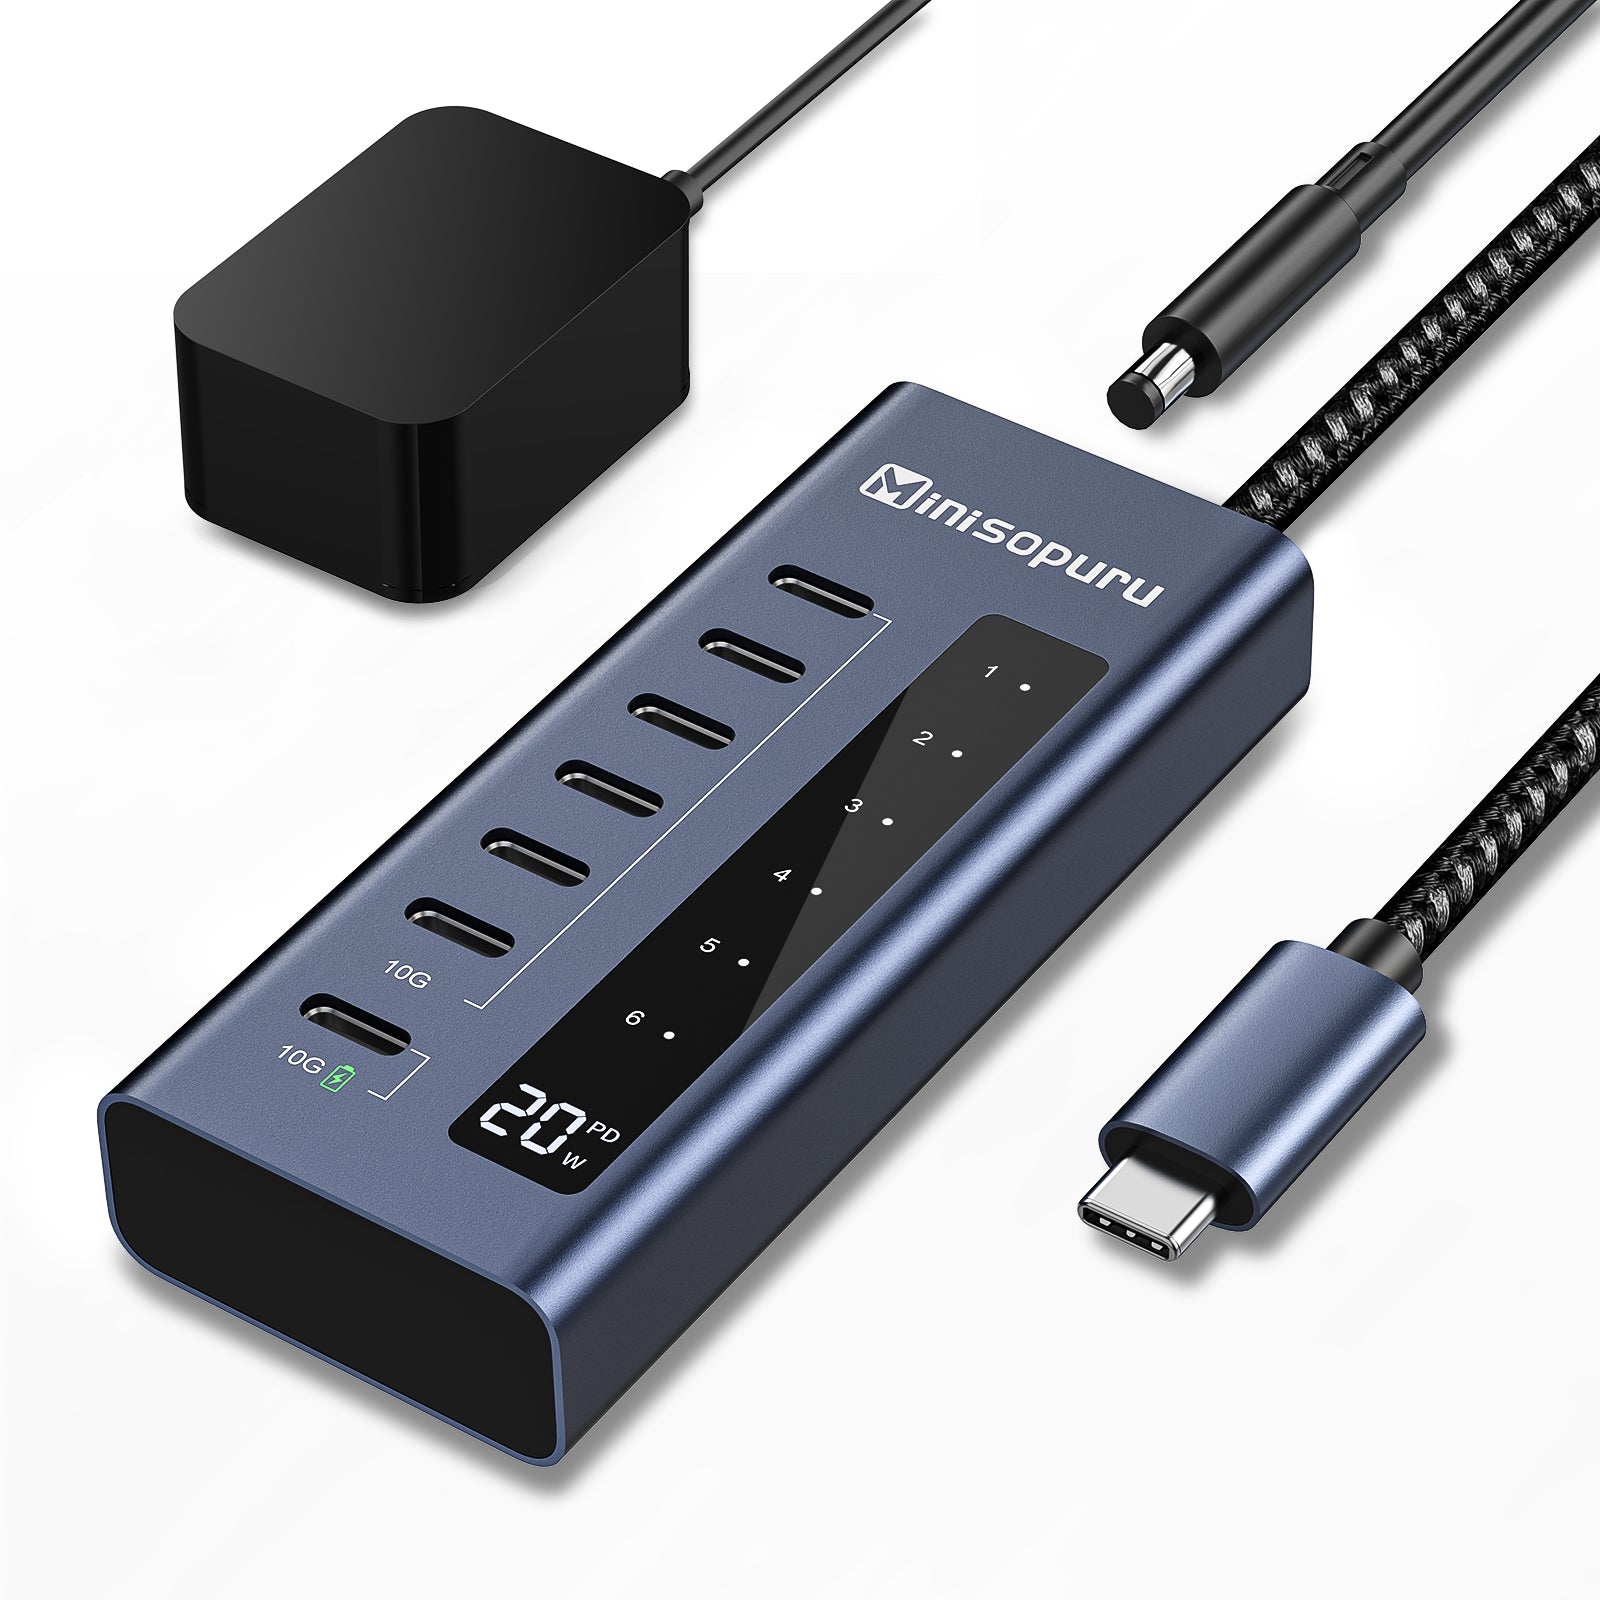 Minisopuru Powered USB C Hub, 7 in 1USB C Hub Powered Support 10Gbps Data & Fast Charging